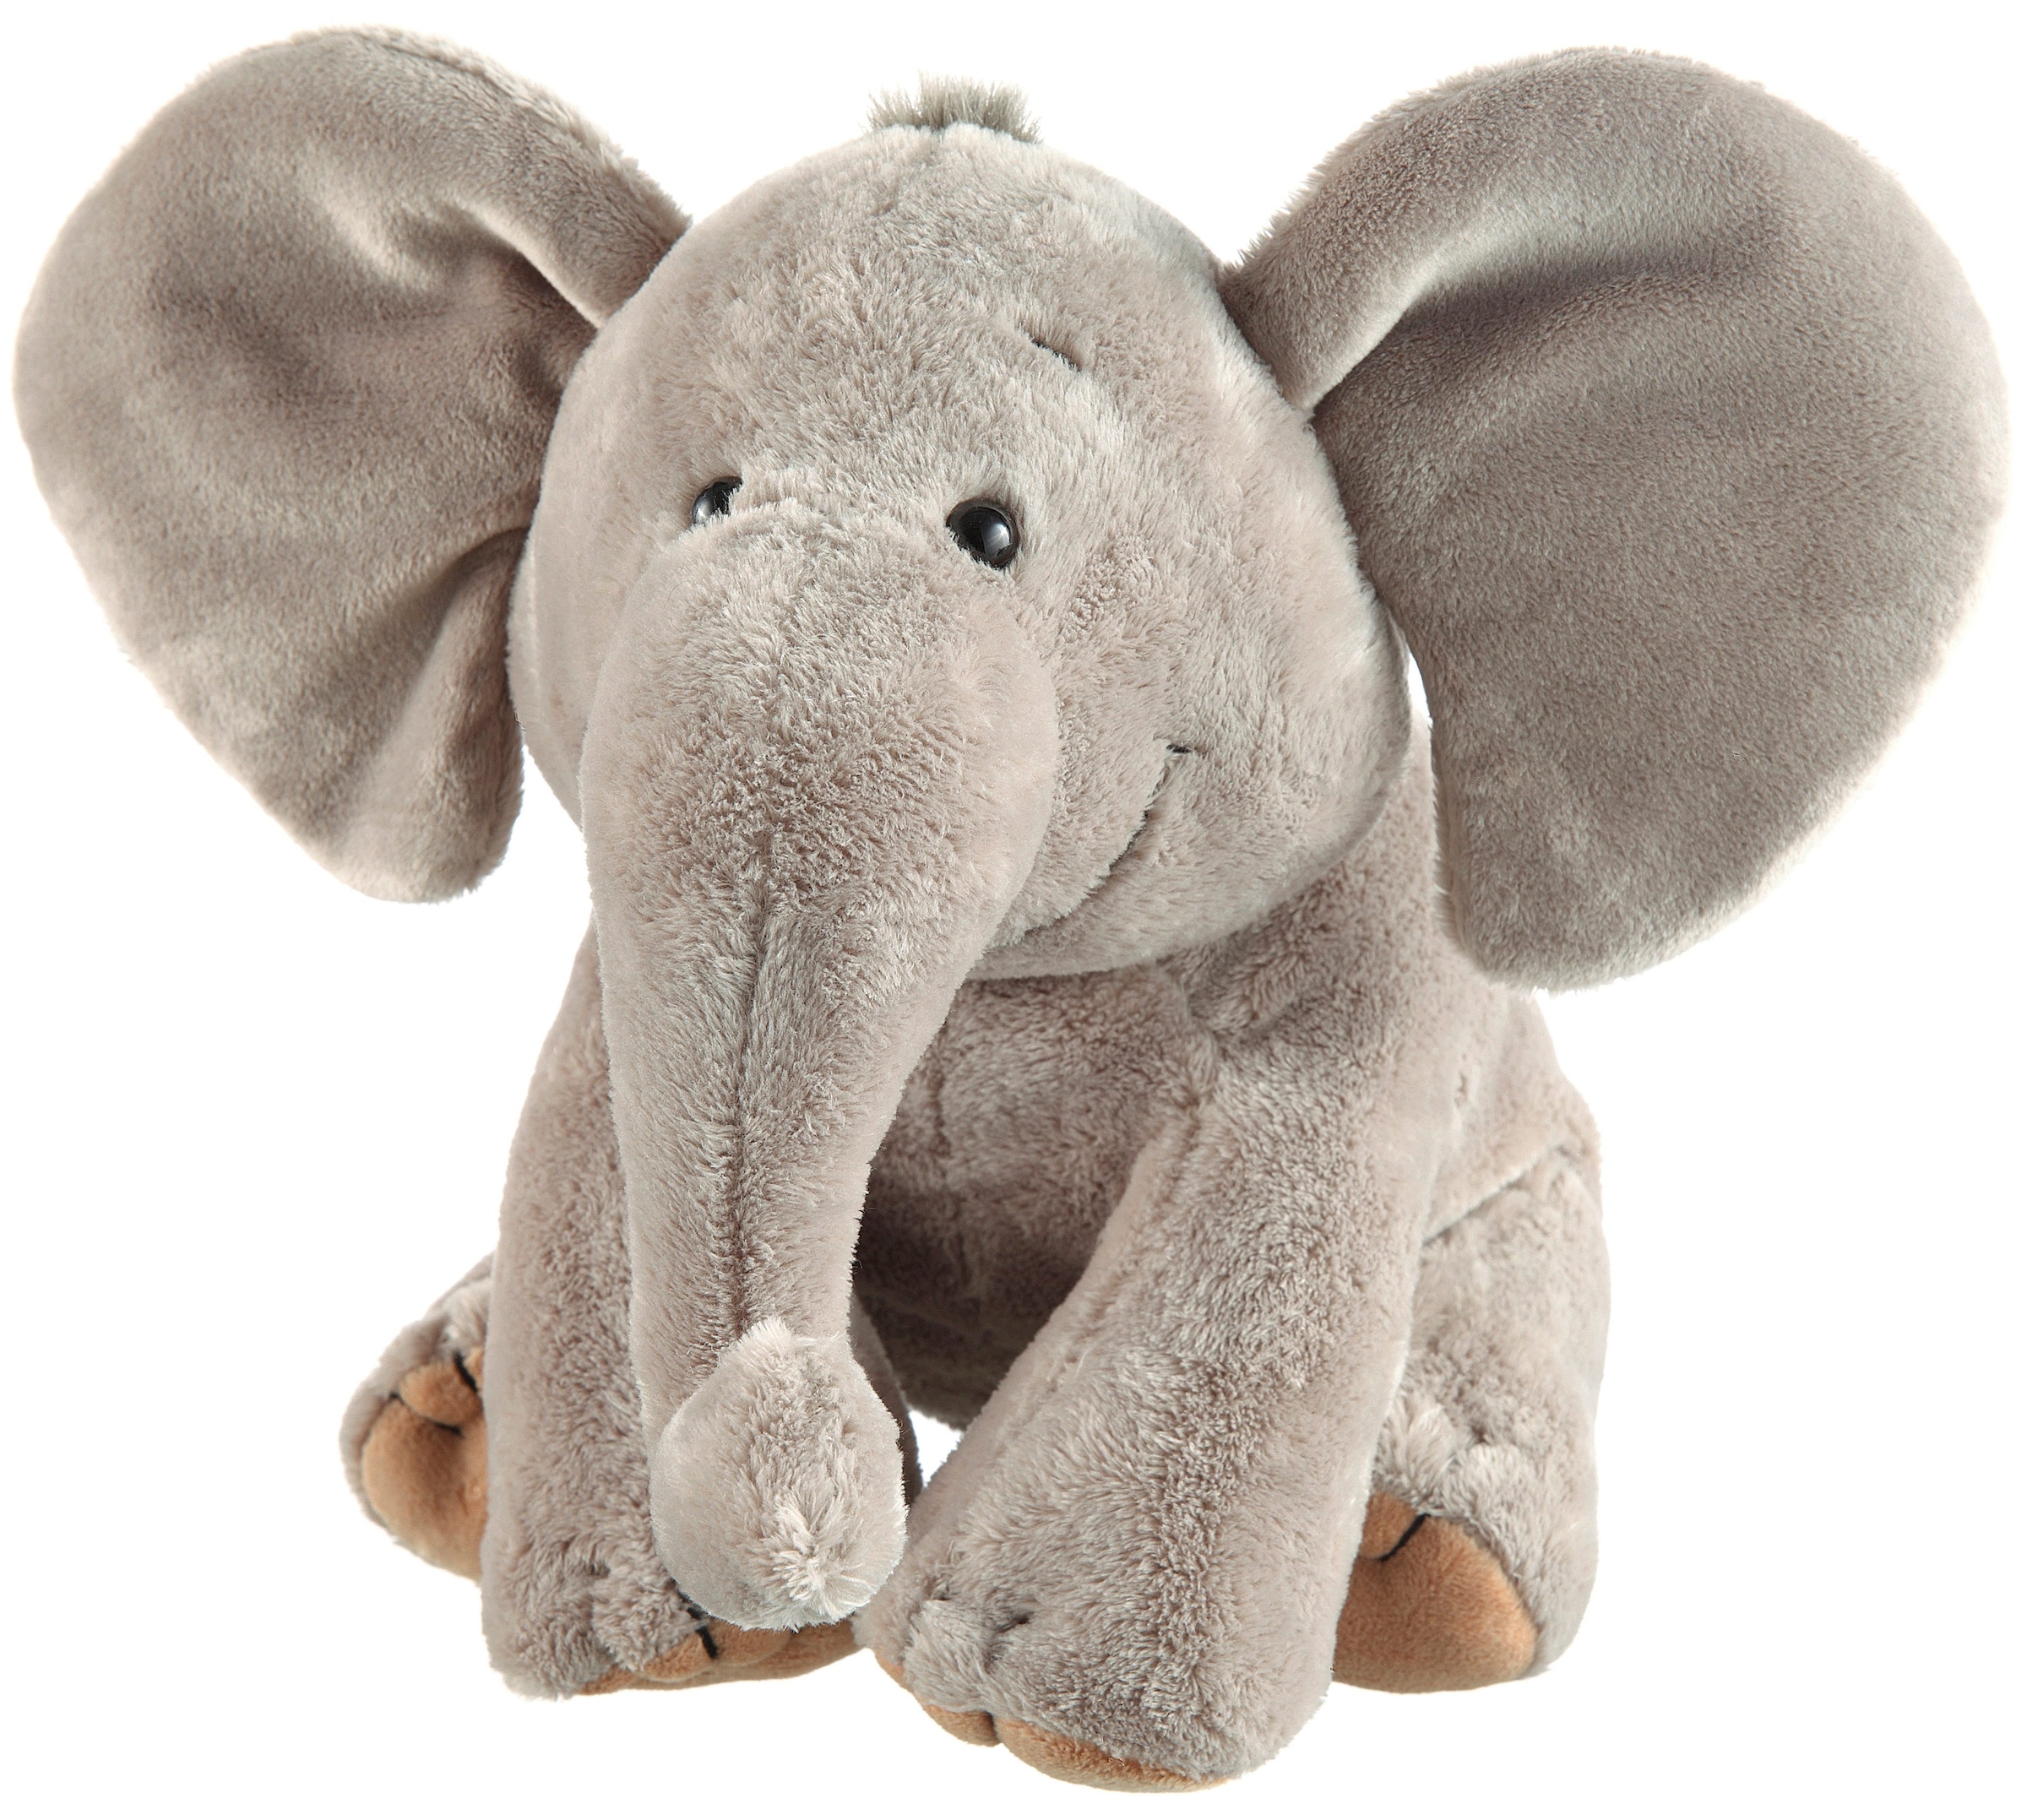 25cm WWF Plüschtier Elefant 2 Varianten Kuscheltier Stofftier grau Elephant 